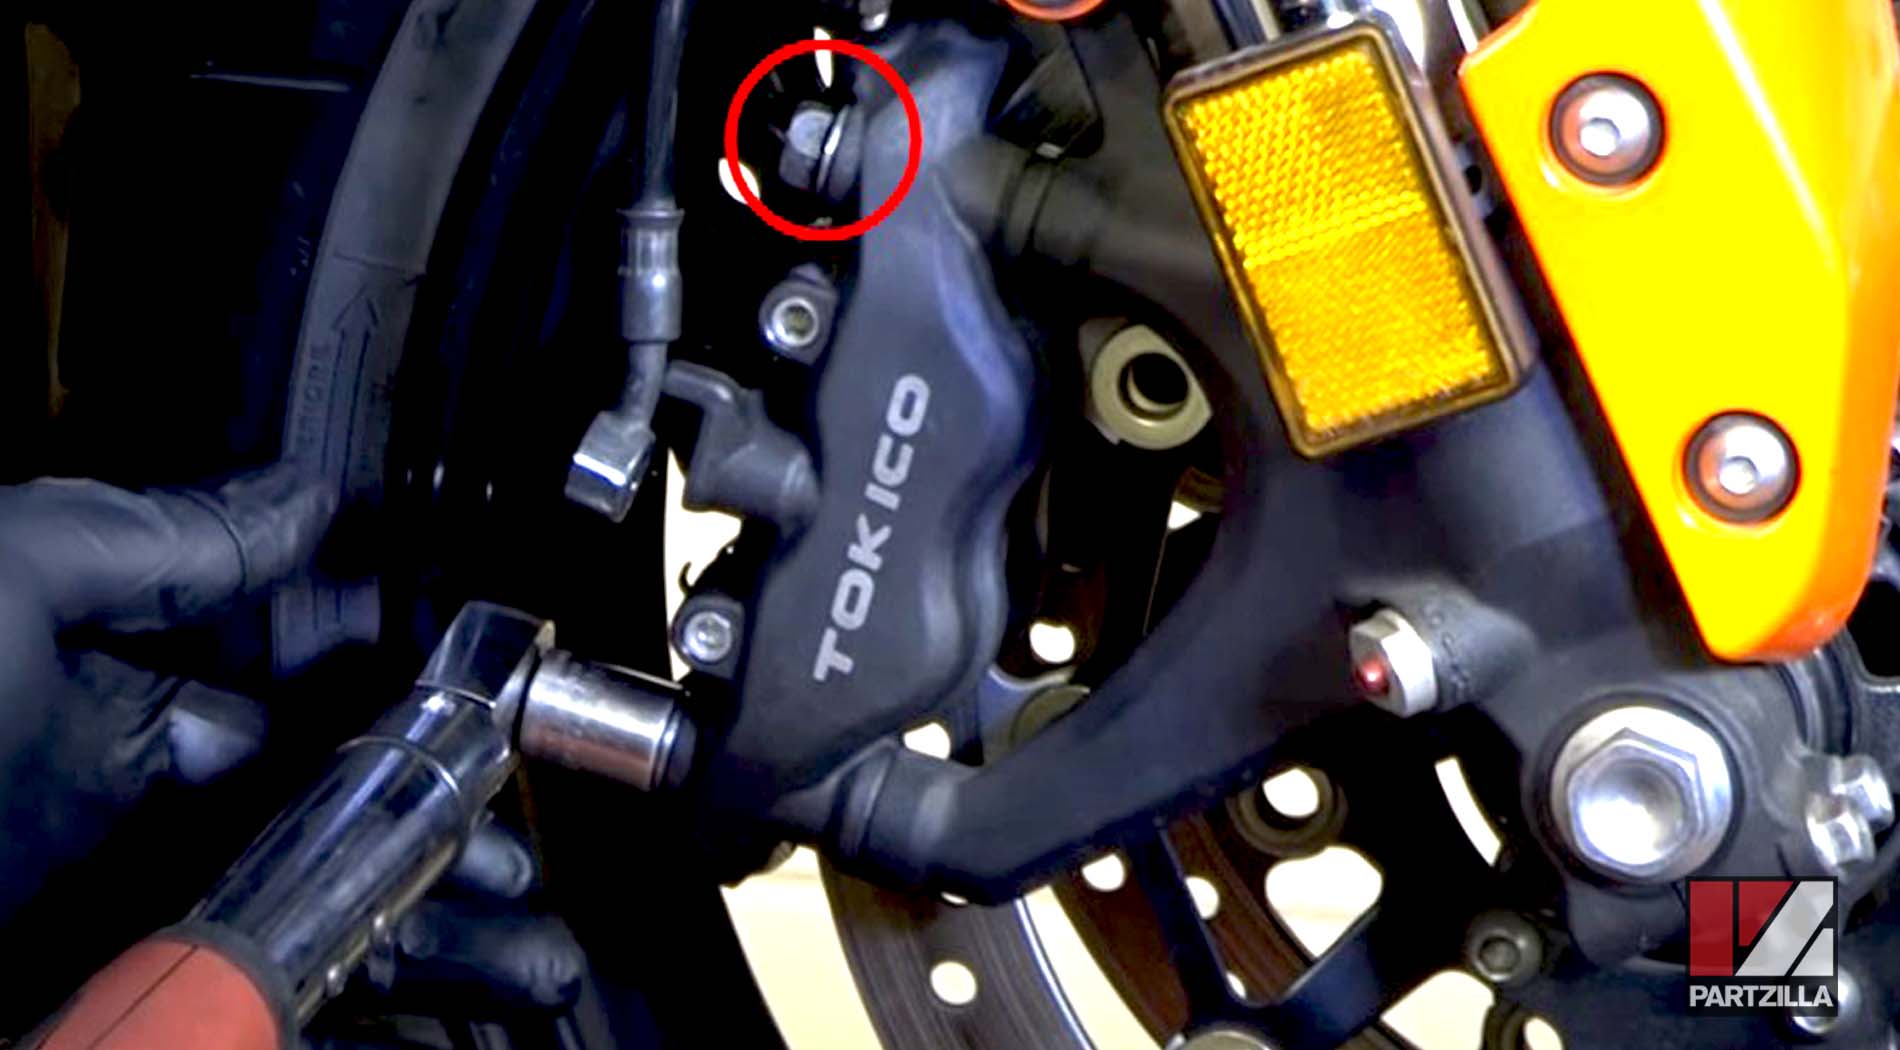 Honda CBR600 brake pads flange bolts